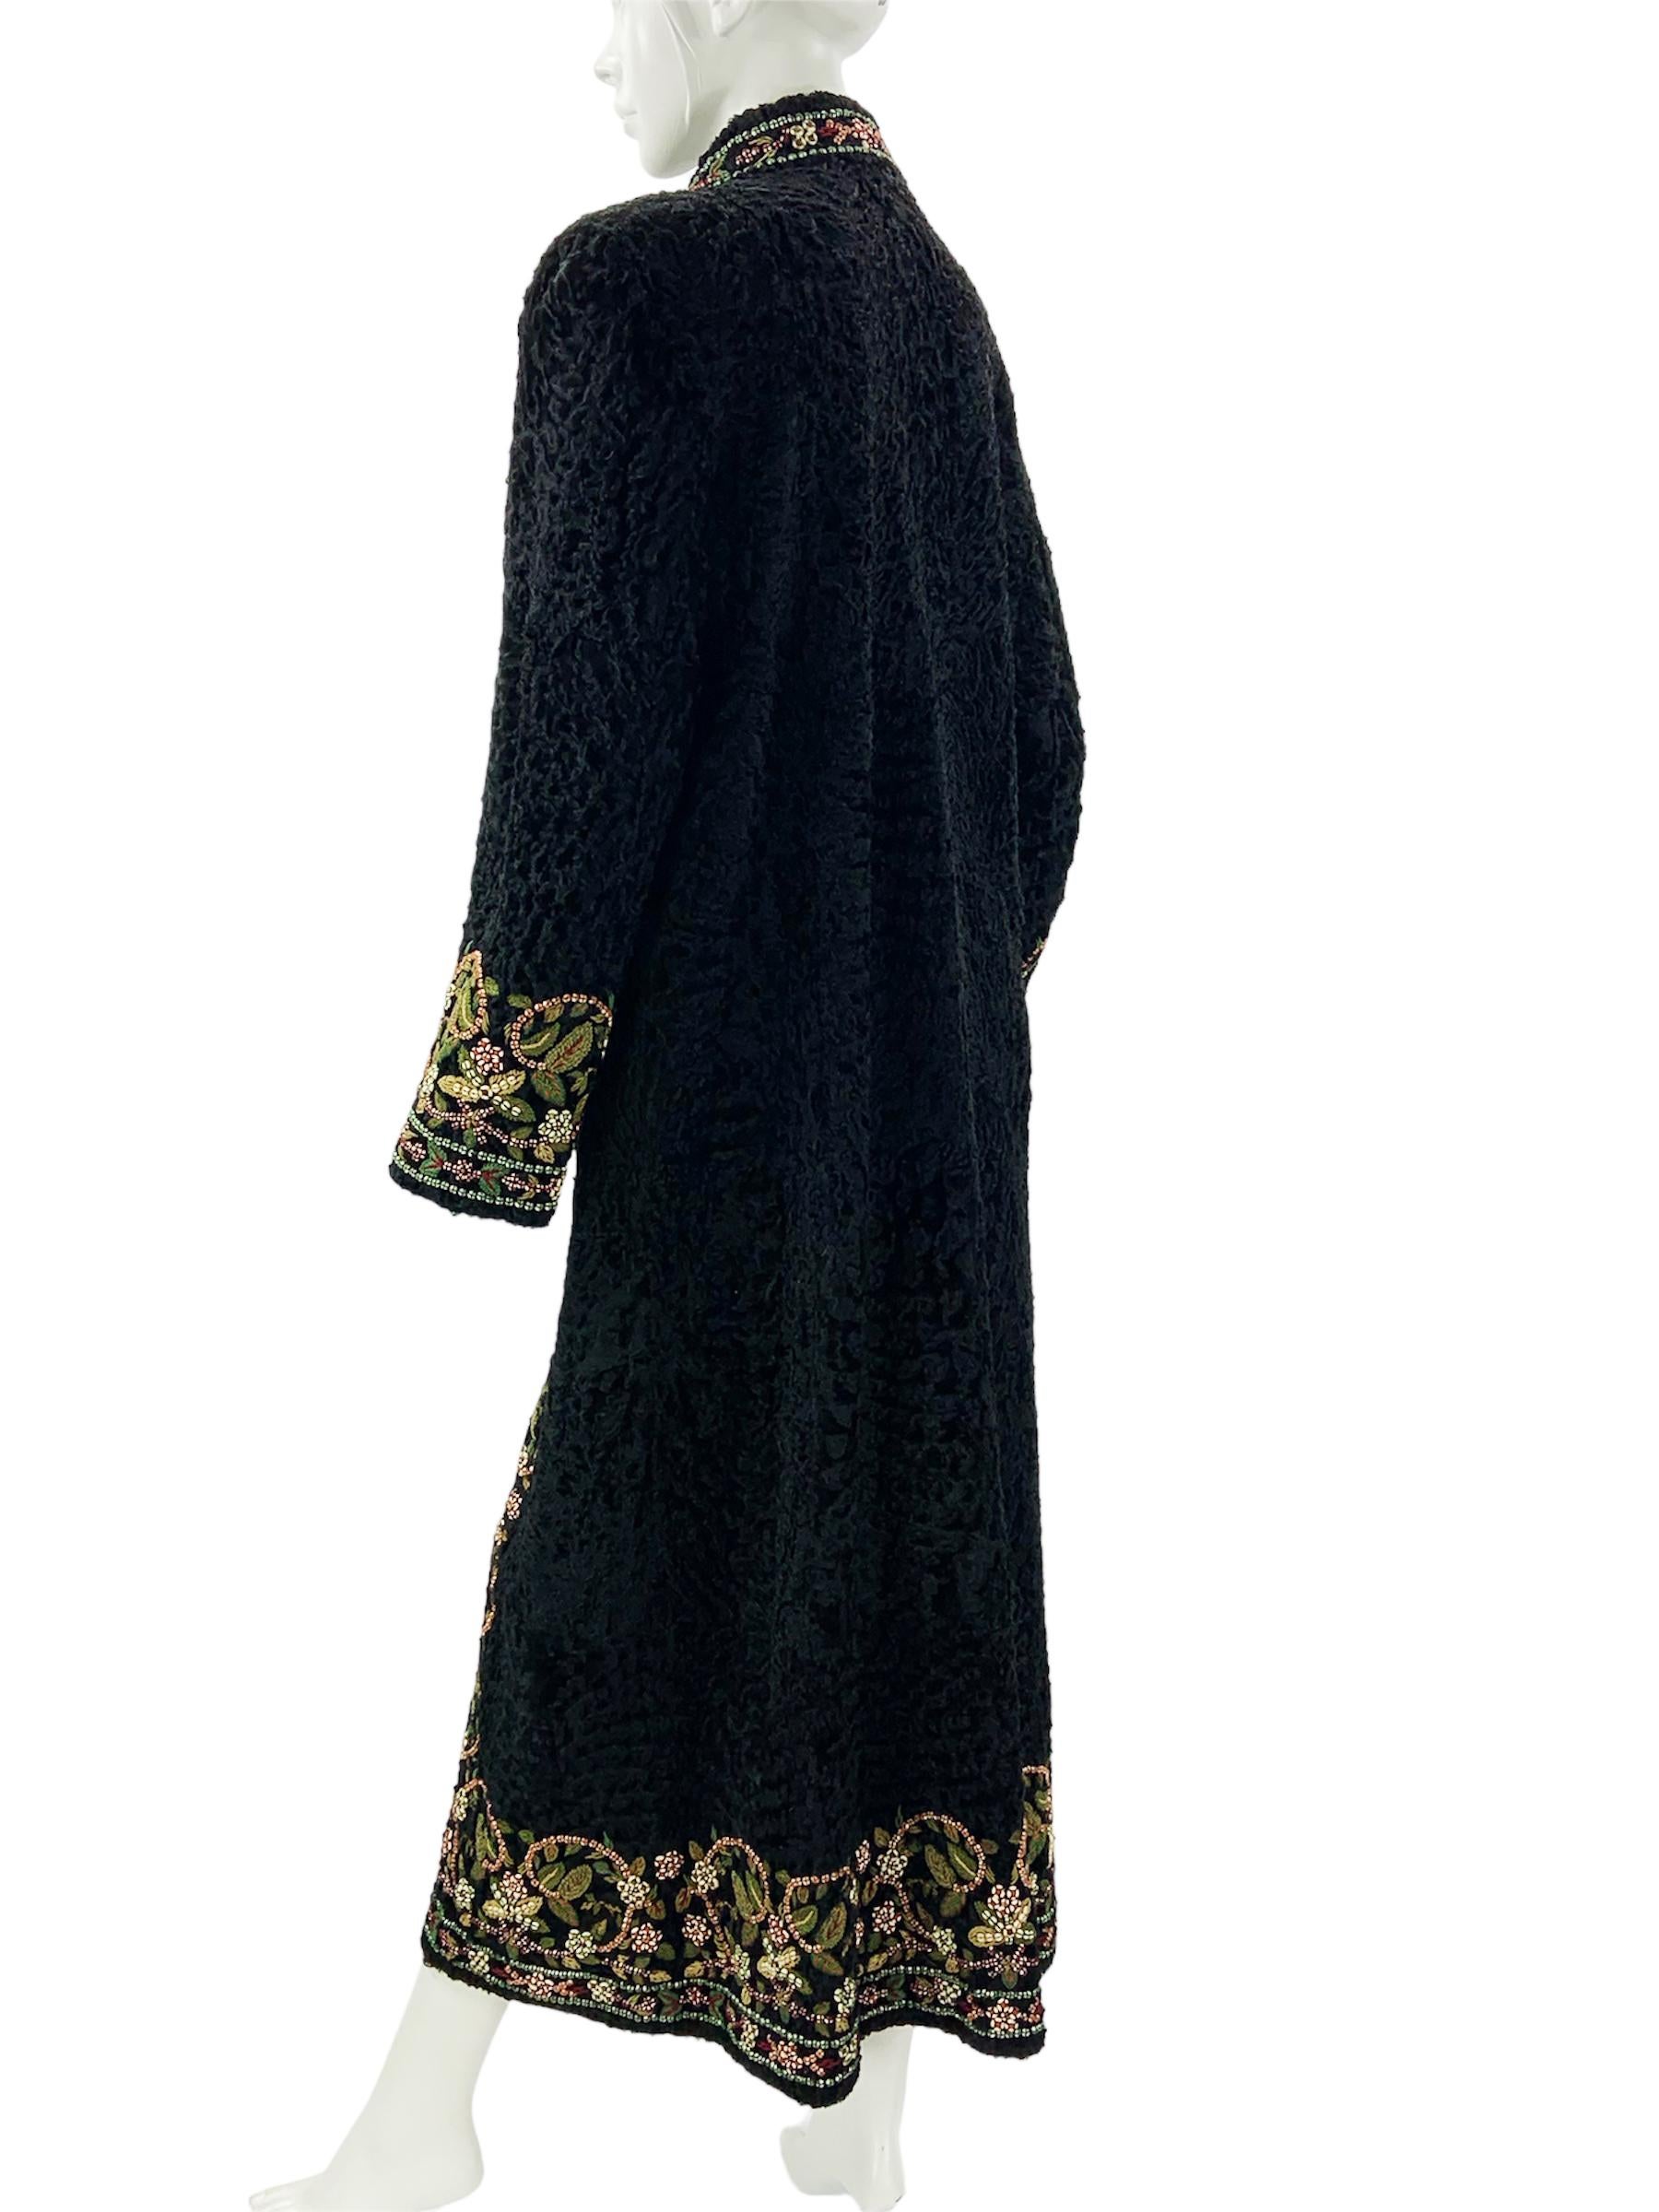 Vintage Oscar de la Renta Couture FW 2002 Broadtail Lamb Beaded Embroidered Coat For Sale 1